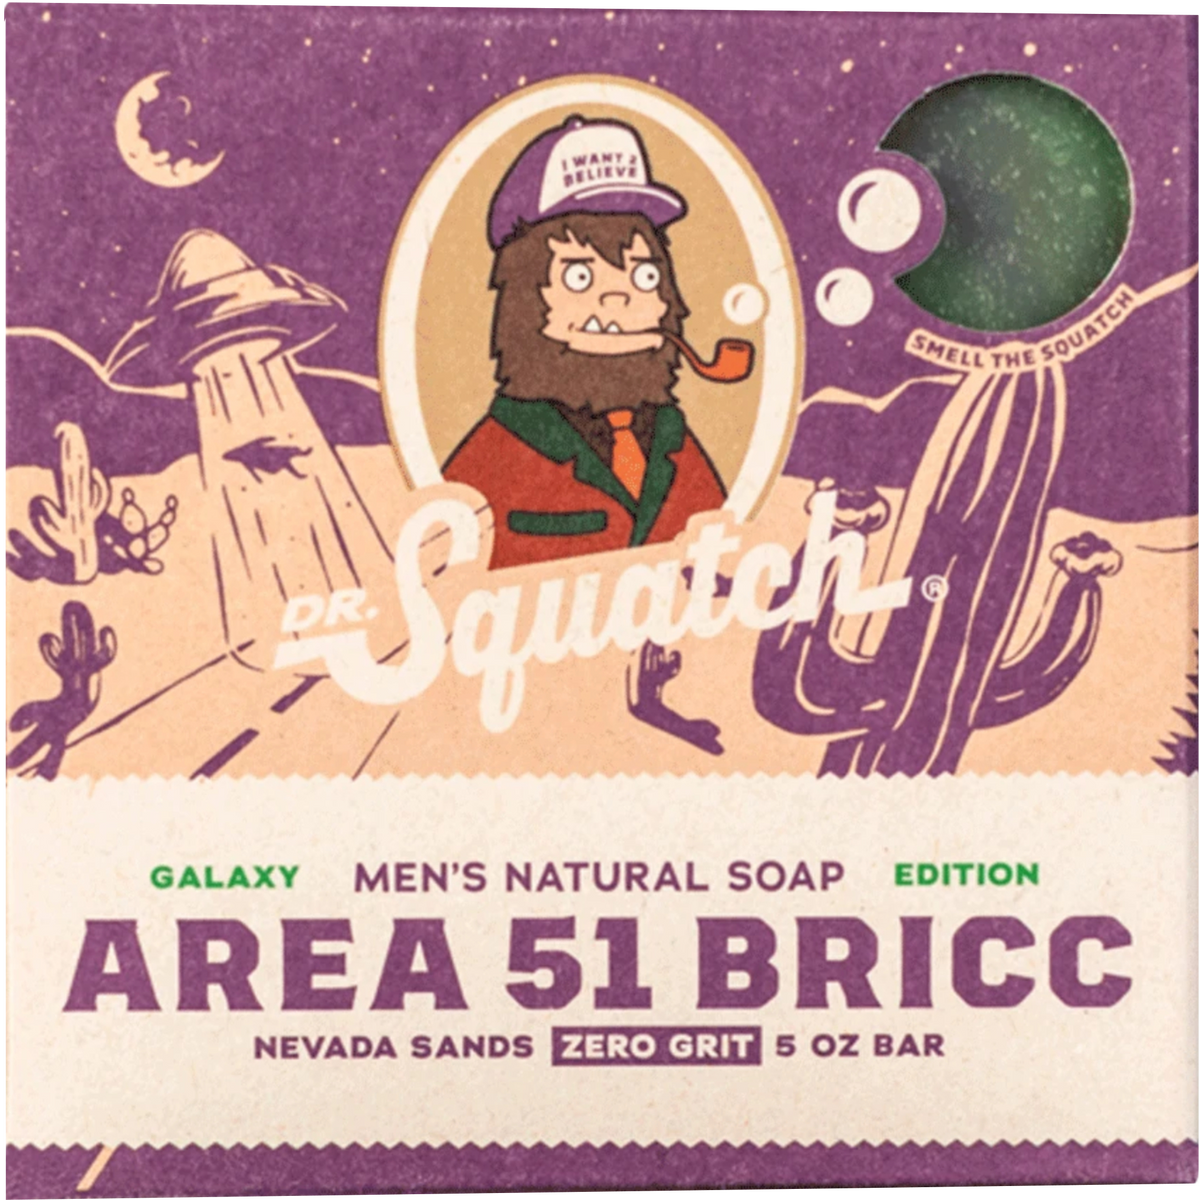 Dr. Squatch Area 51 Bricc 1 single bar limited edition soap Zero Grit 5 oz  bar